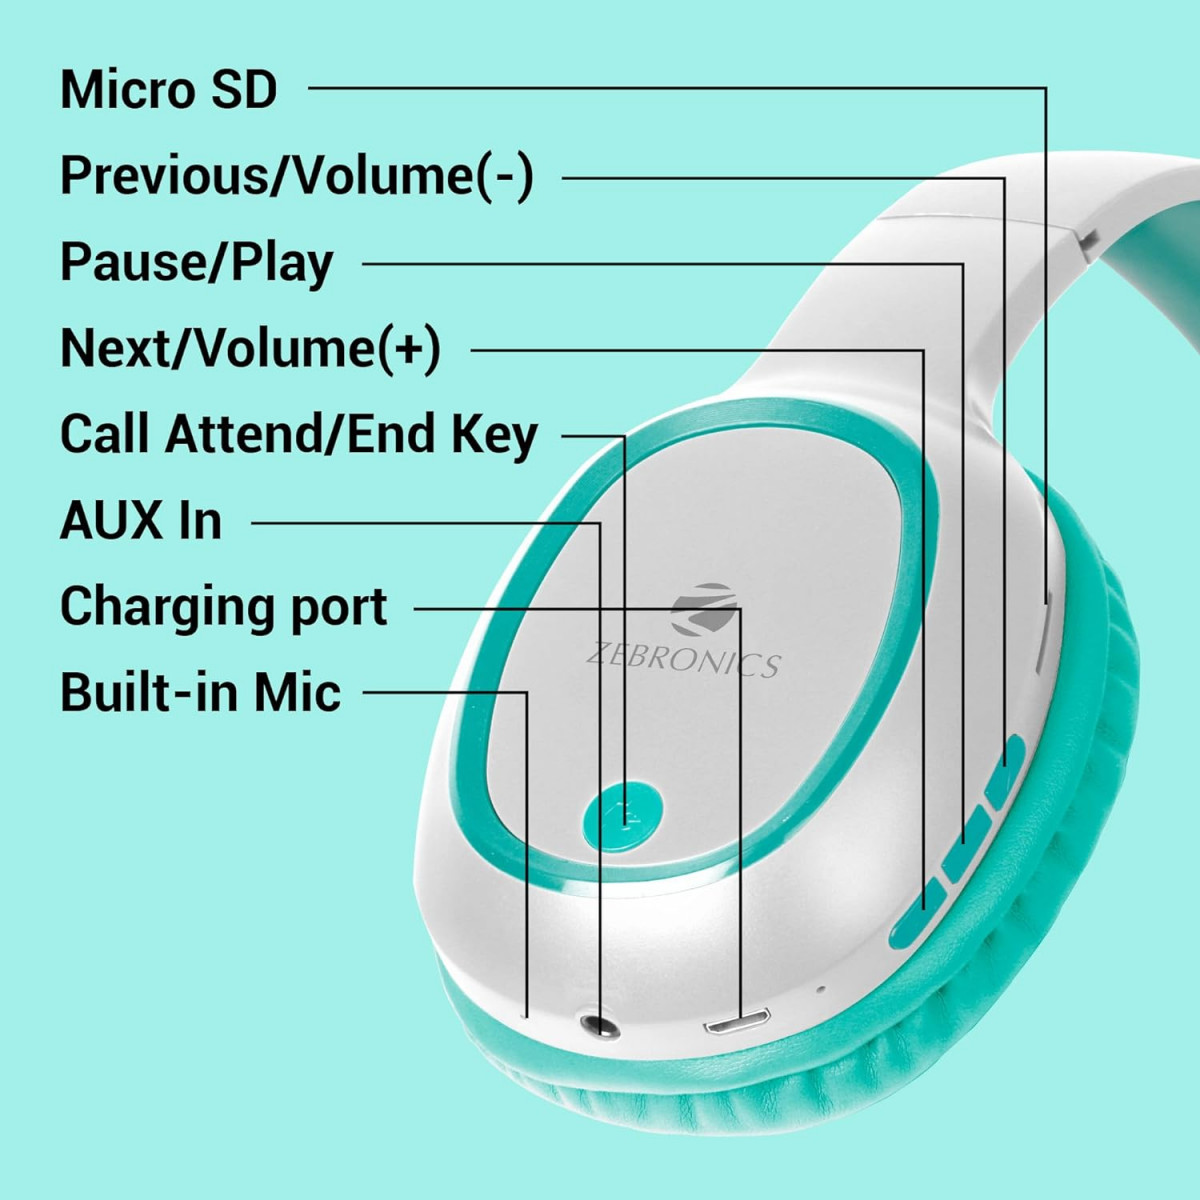 ZEBRONICS Thunder Bluetooth 53 Wireless Over Ear Headphones Sea Green